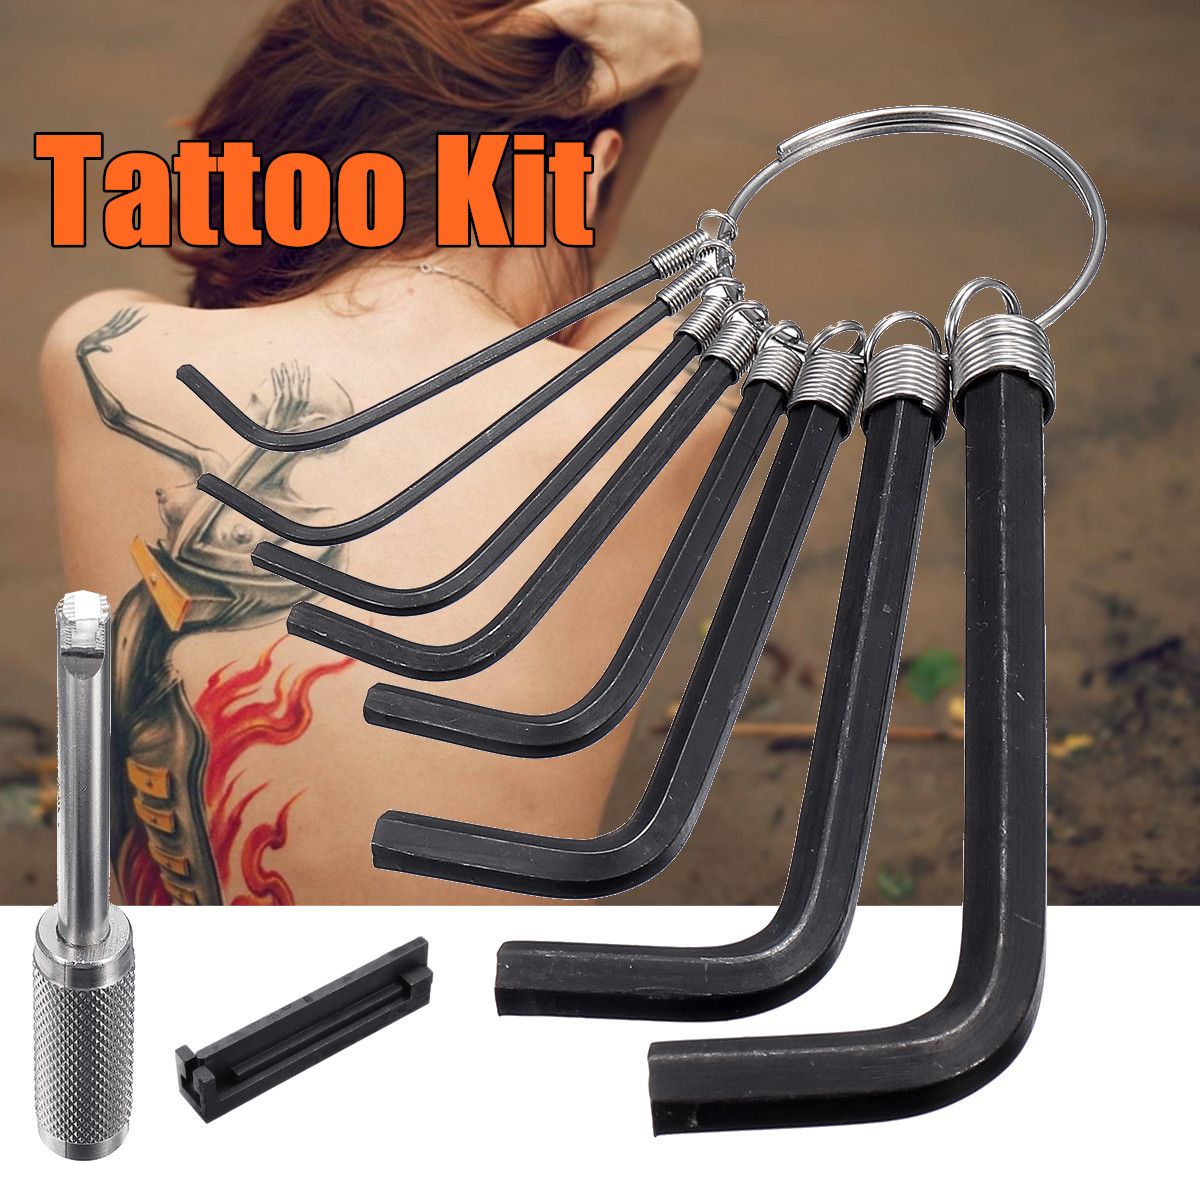 Beginner-Complete-Tattoo-Kit-Coil-Gun-Machine-Grip-Equipment-Tattoo-Accessories-Set-1317098